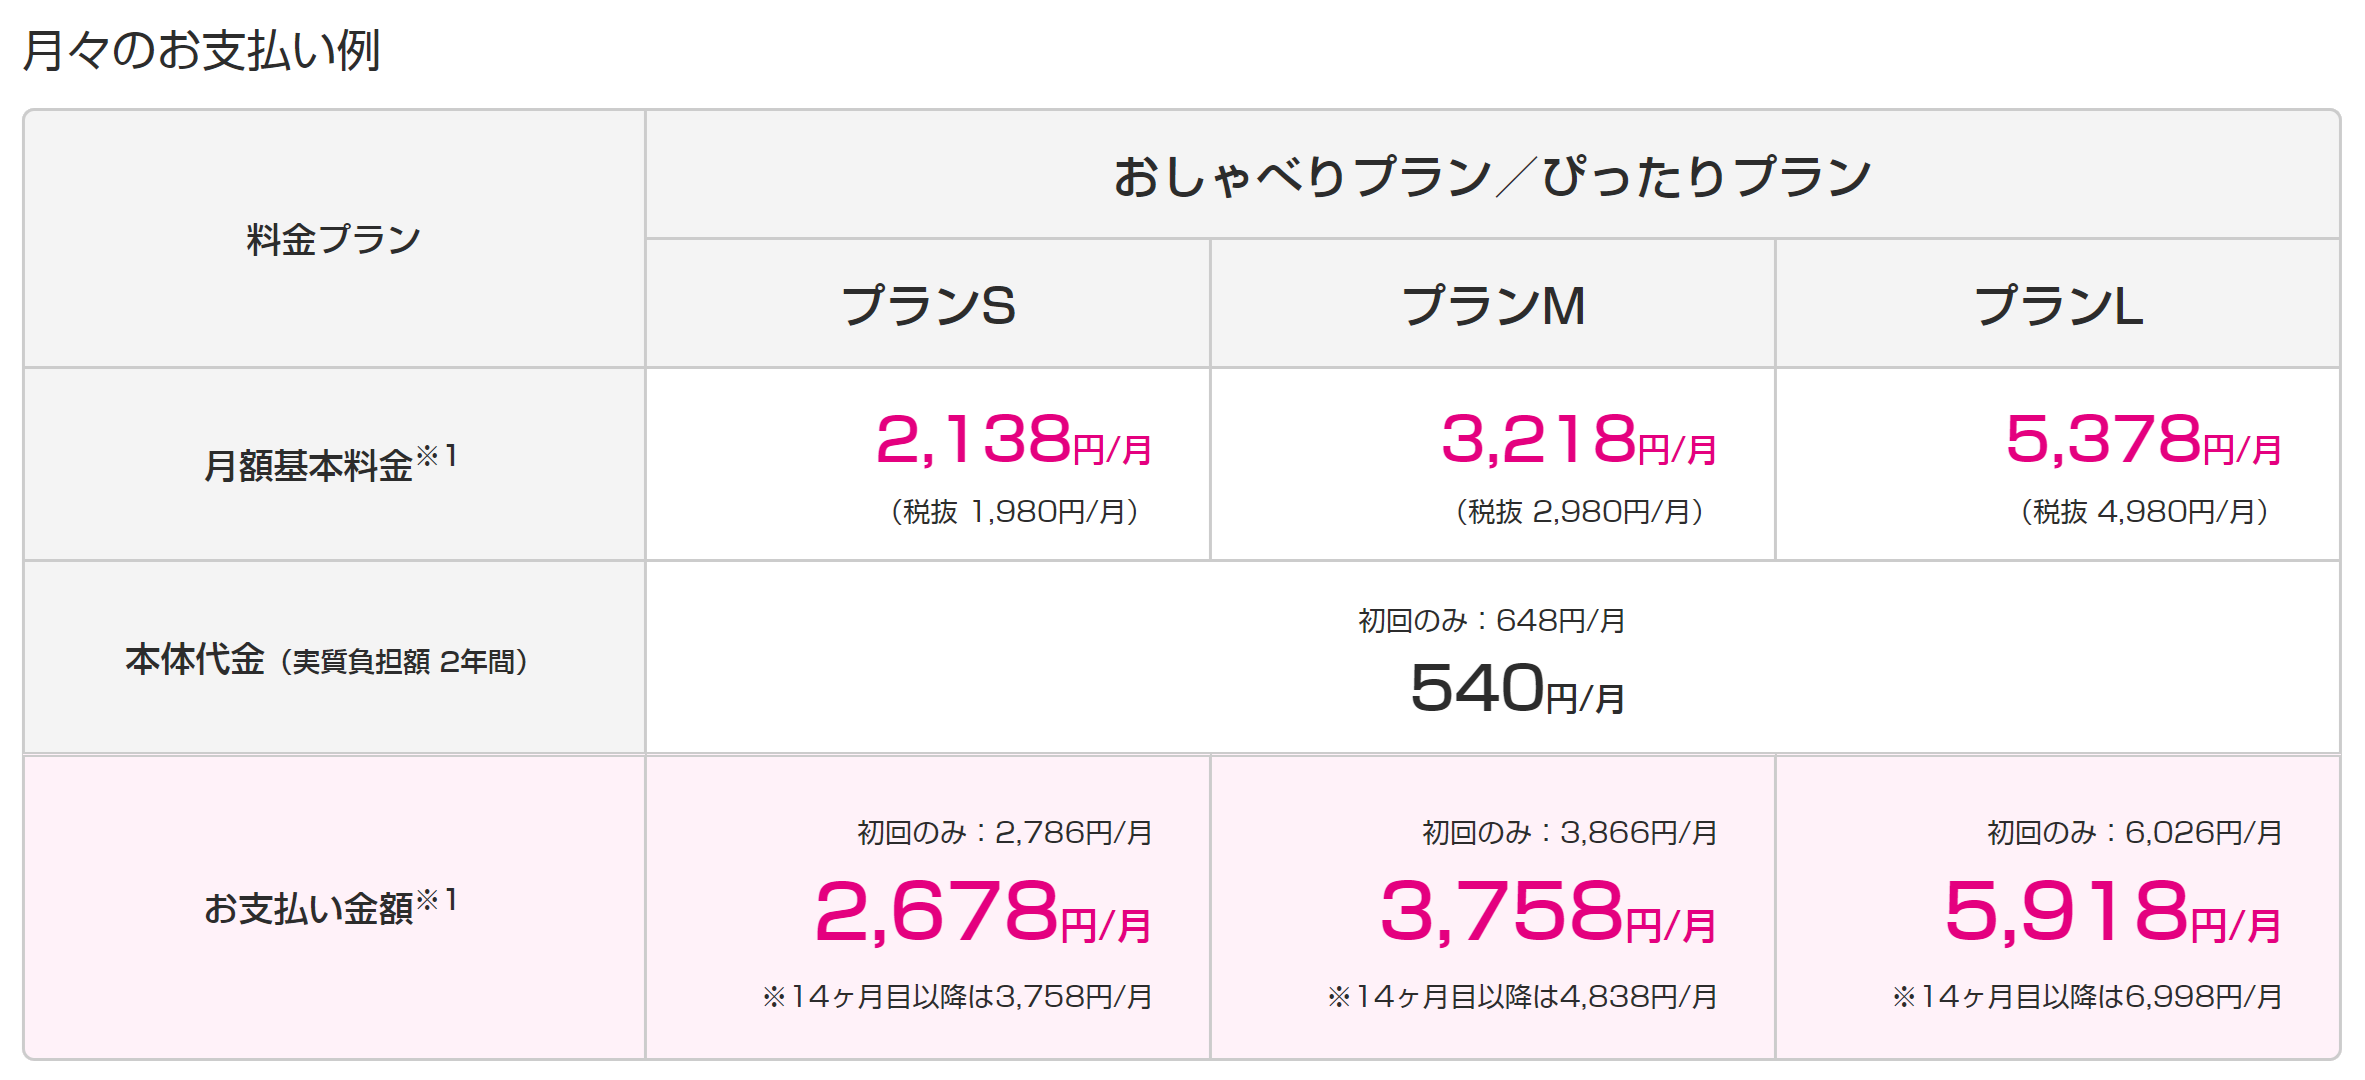 UQ mobileより｢HUAWEI nova 2｣が1月26日に発売。一括3万1212円